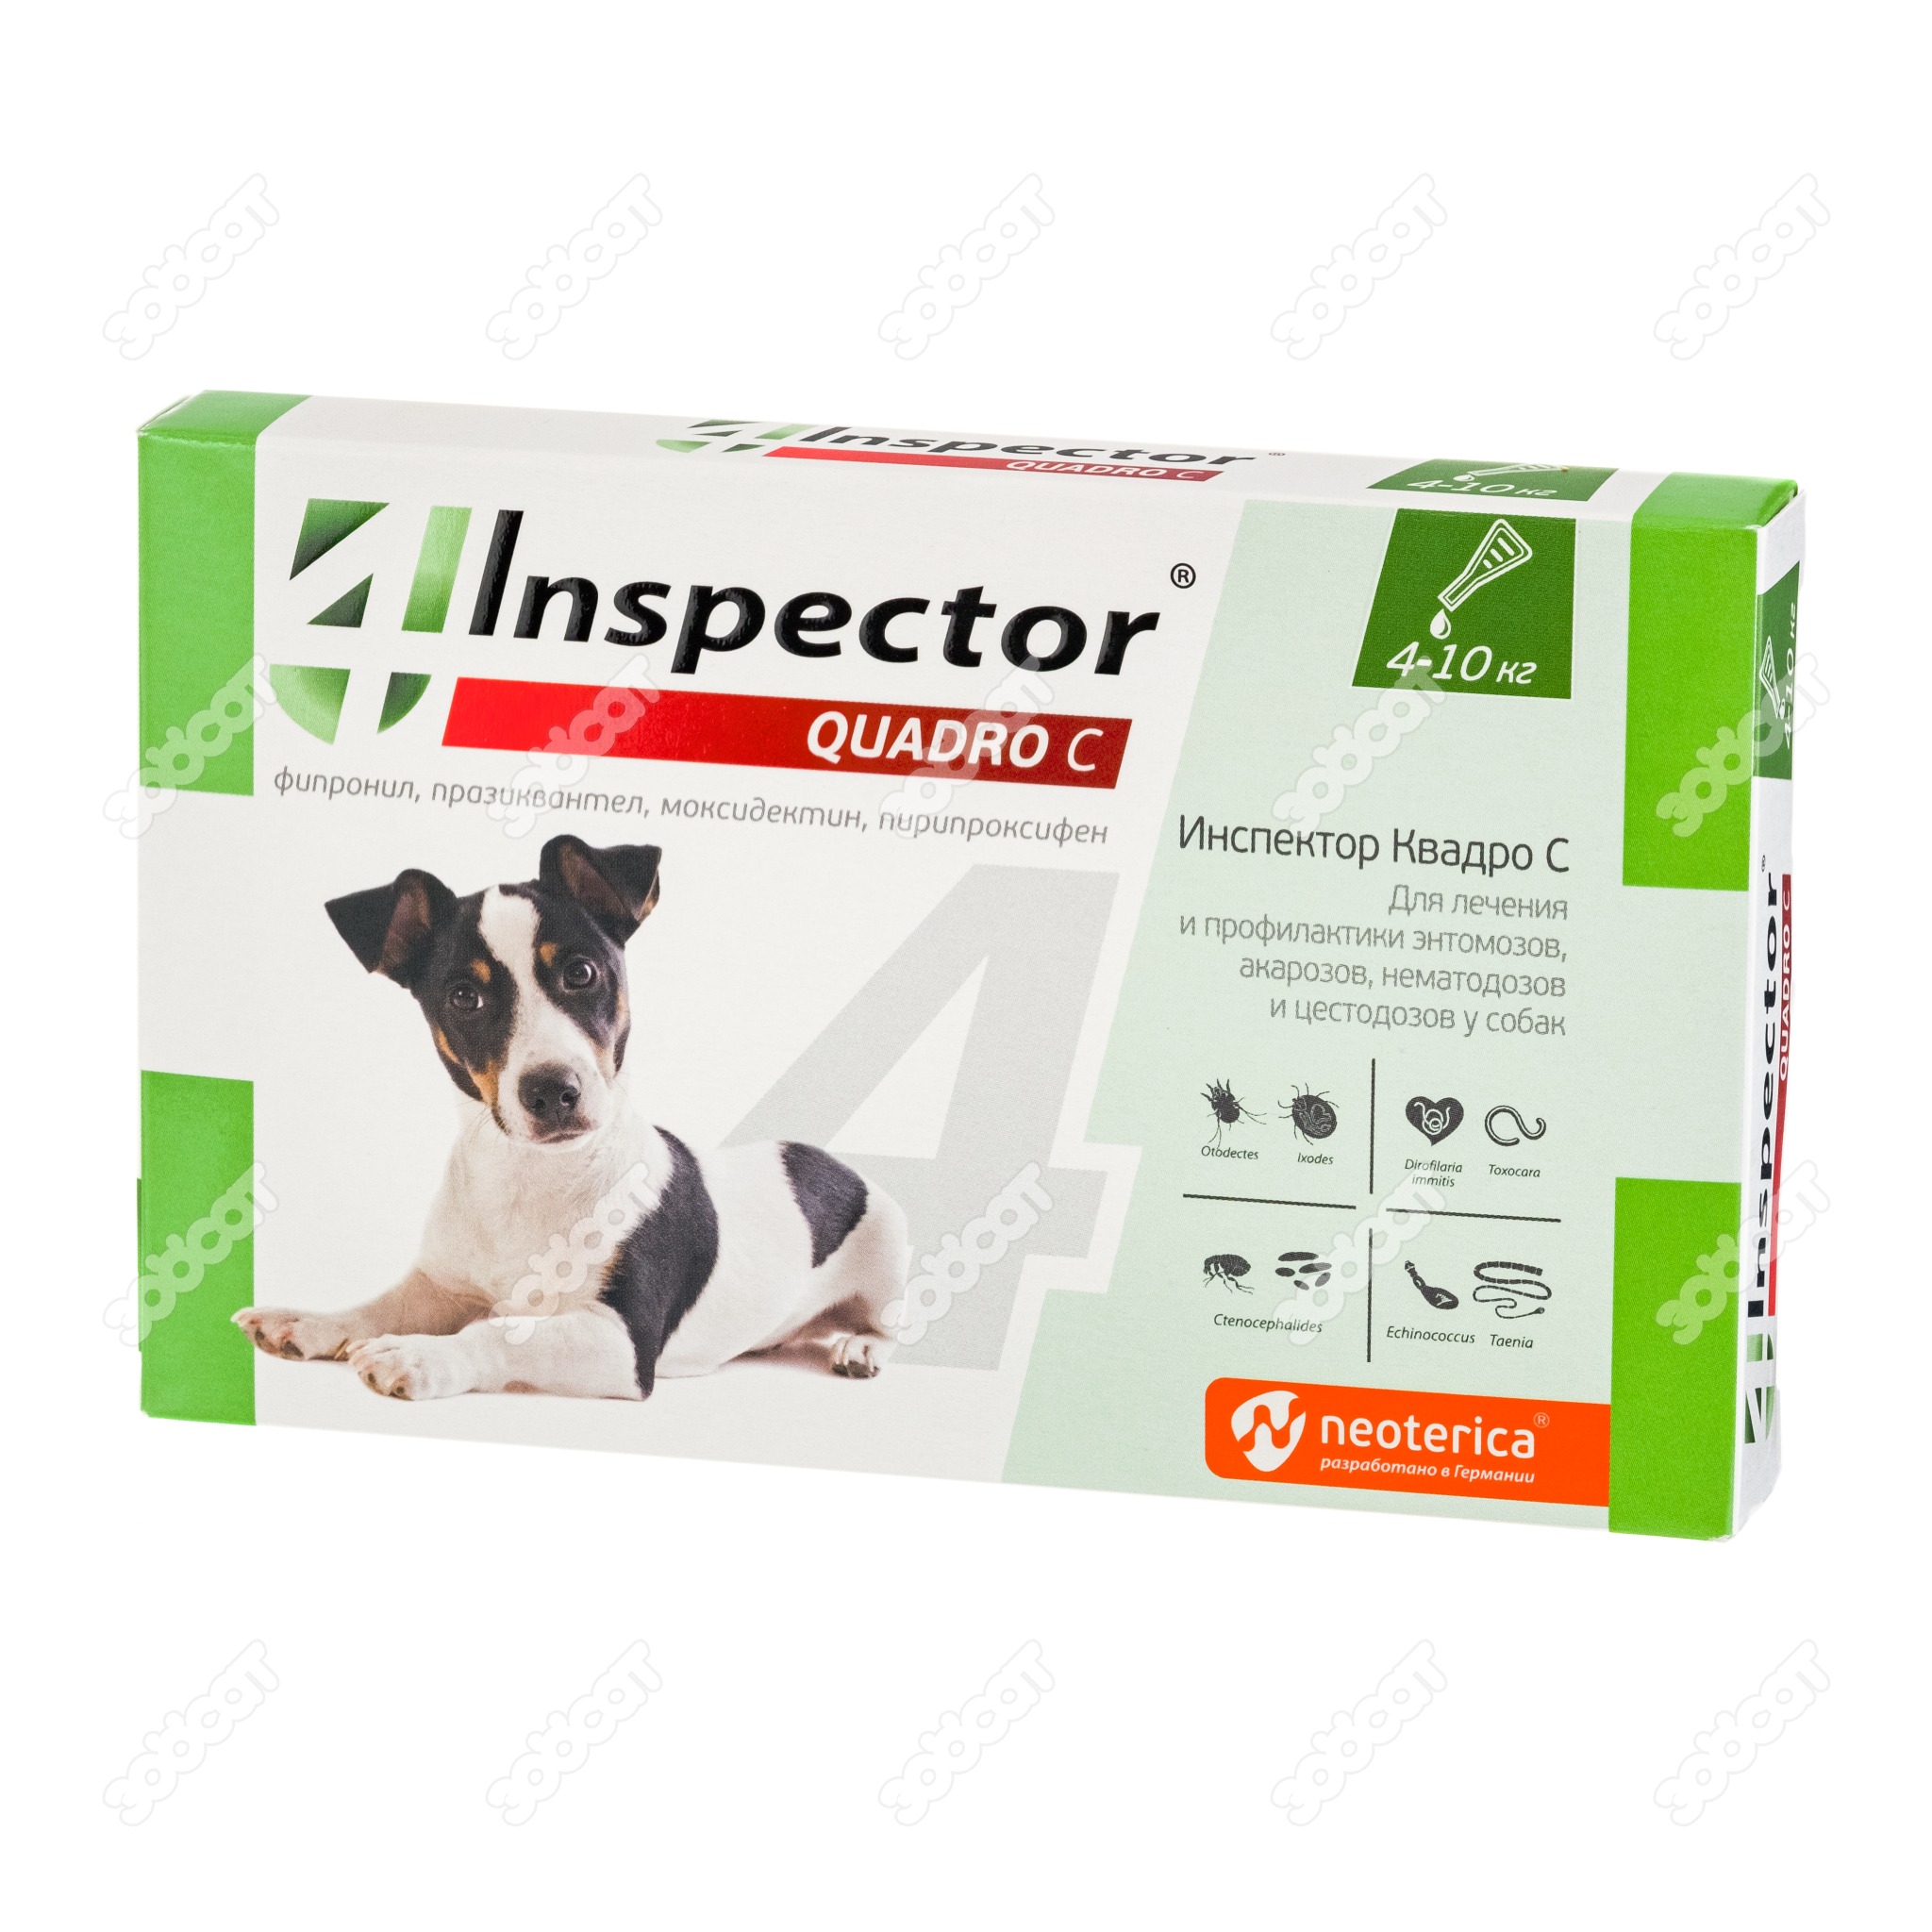 Inspector quadro tabs цены. Inspector Quadro капли для собак 4 - 10 кг, 1 пипетка.. Инспектор капли для собак до 4 кг. Инспектор для собак 25-40 кг 1 пипетка. Инспектор Quadro с капли для собак 25-40 кг.